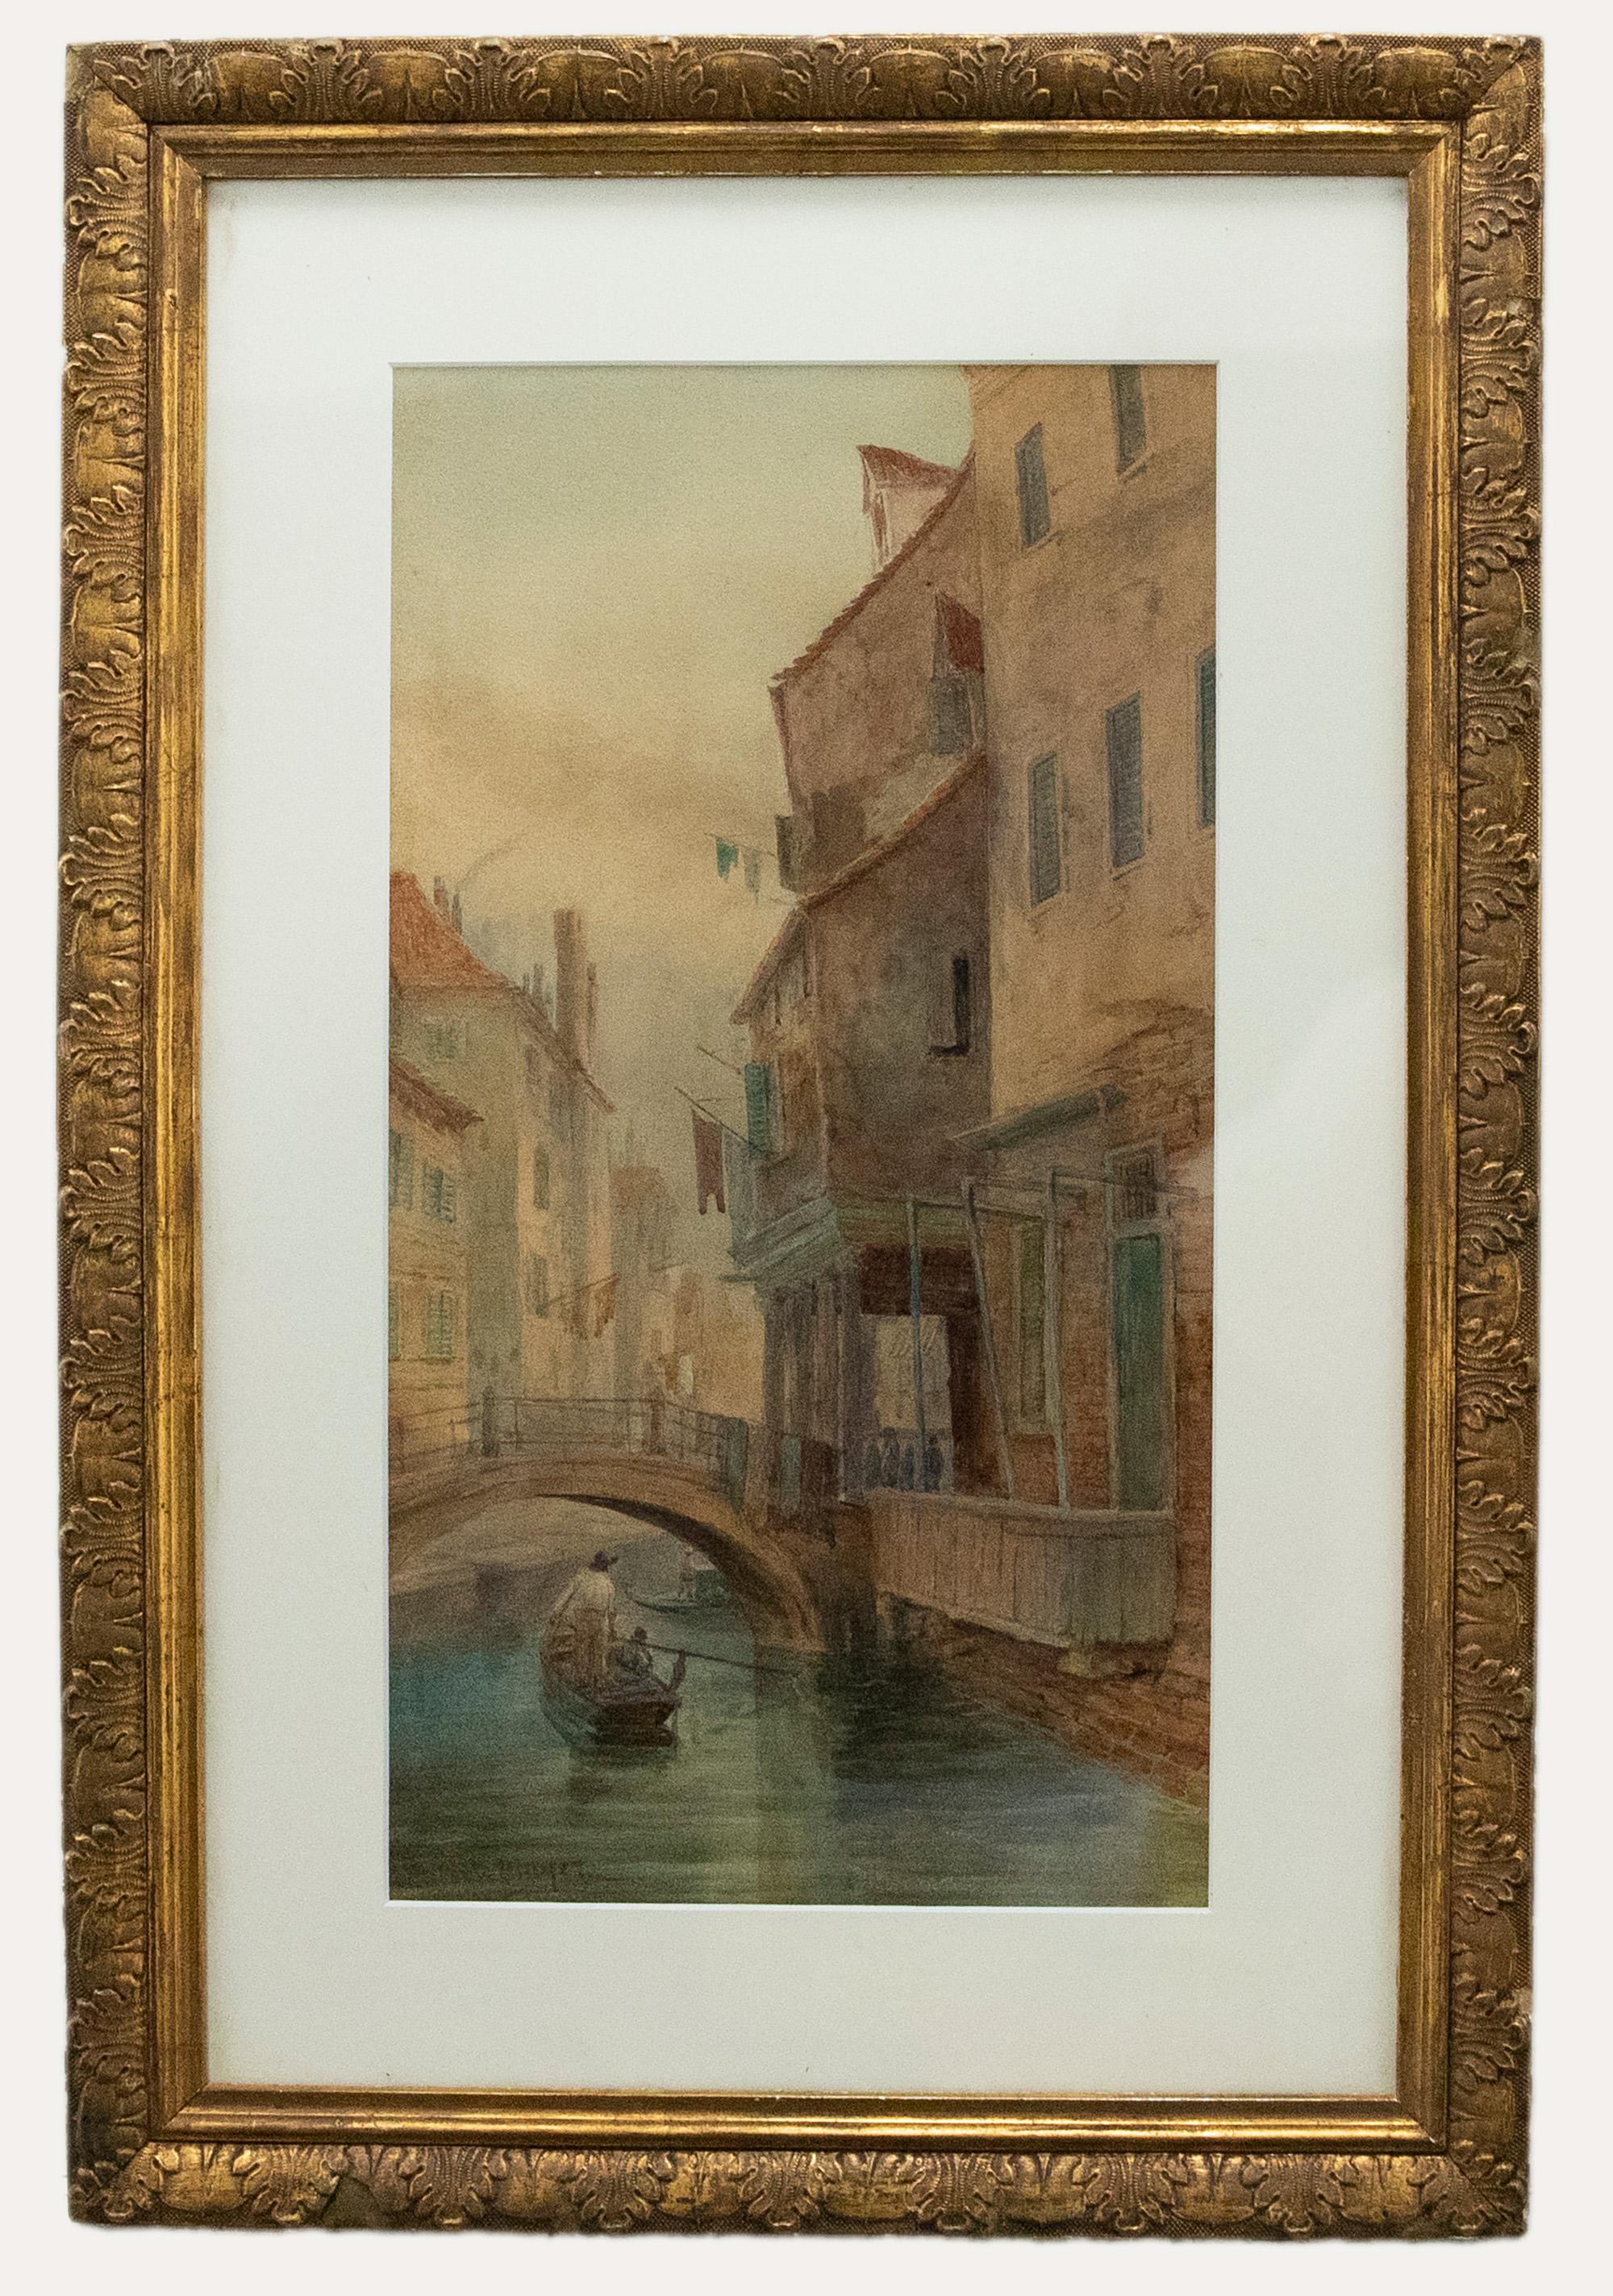 Unknown Landscape Art - F. Da Ponte Player - Framed 19th Century Watercolour, Boating Around Venice